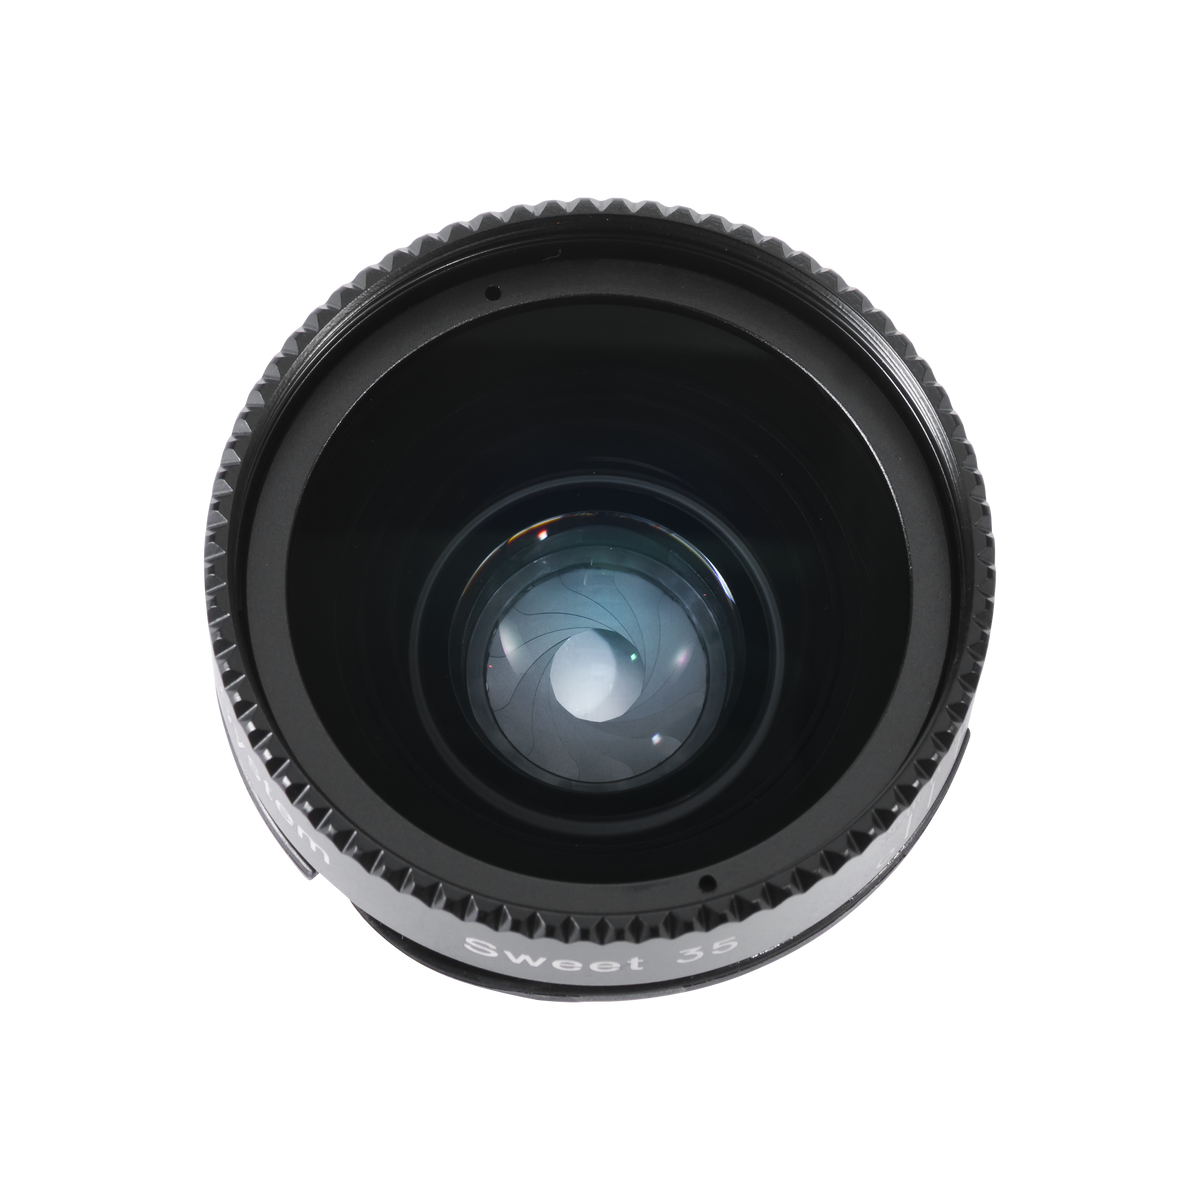 Sweet 35 Optic | Portrait Camera Lens | Lensbaby